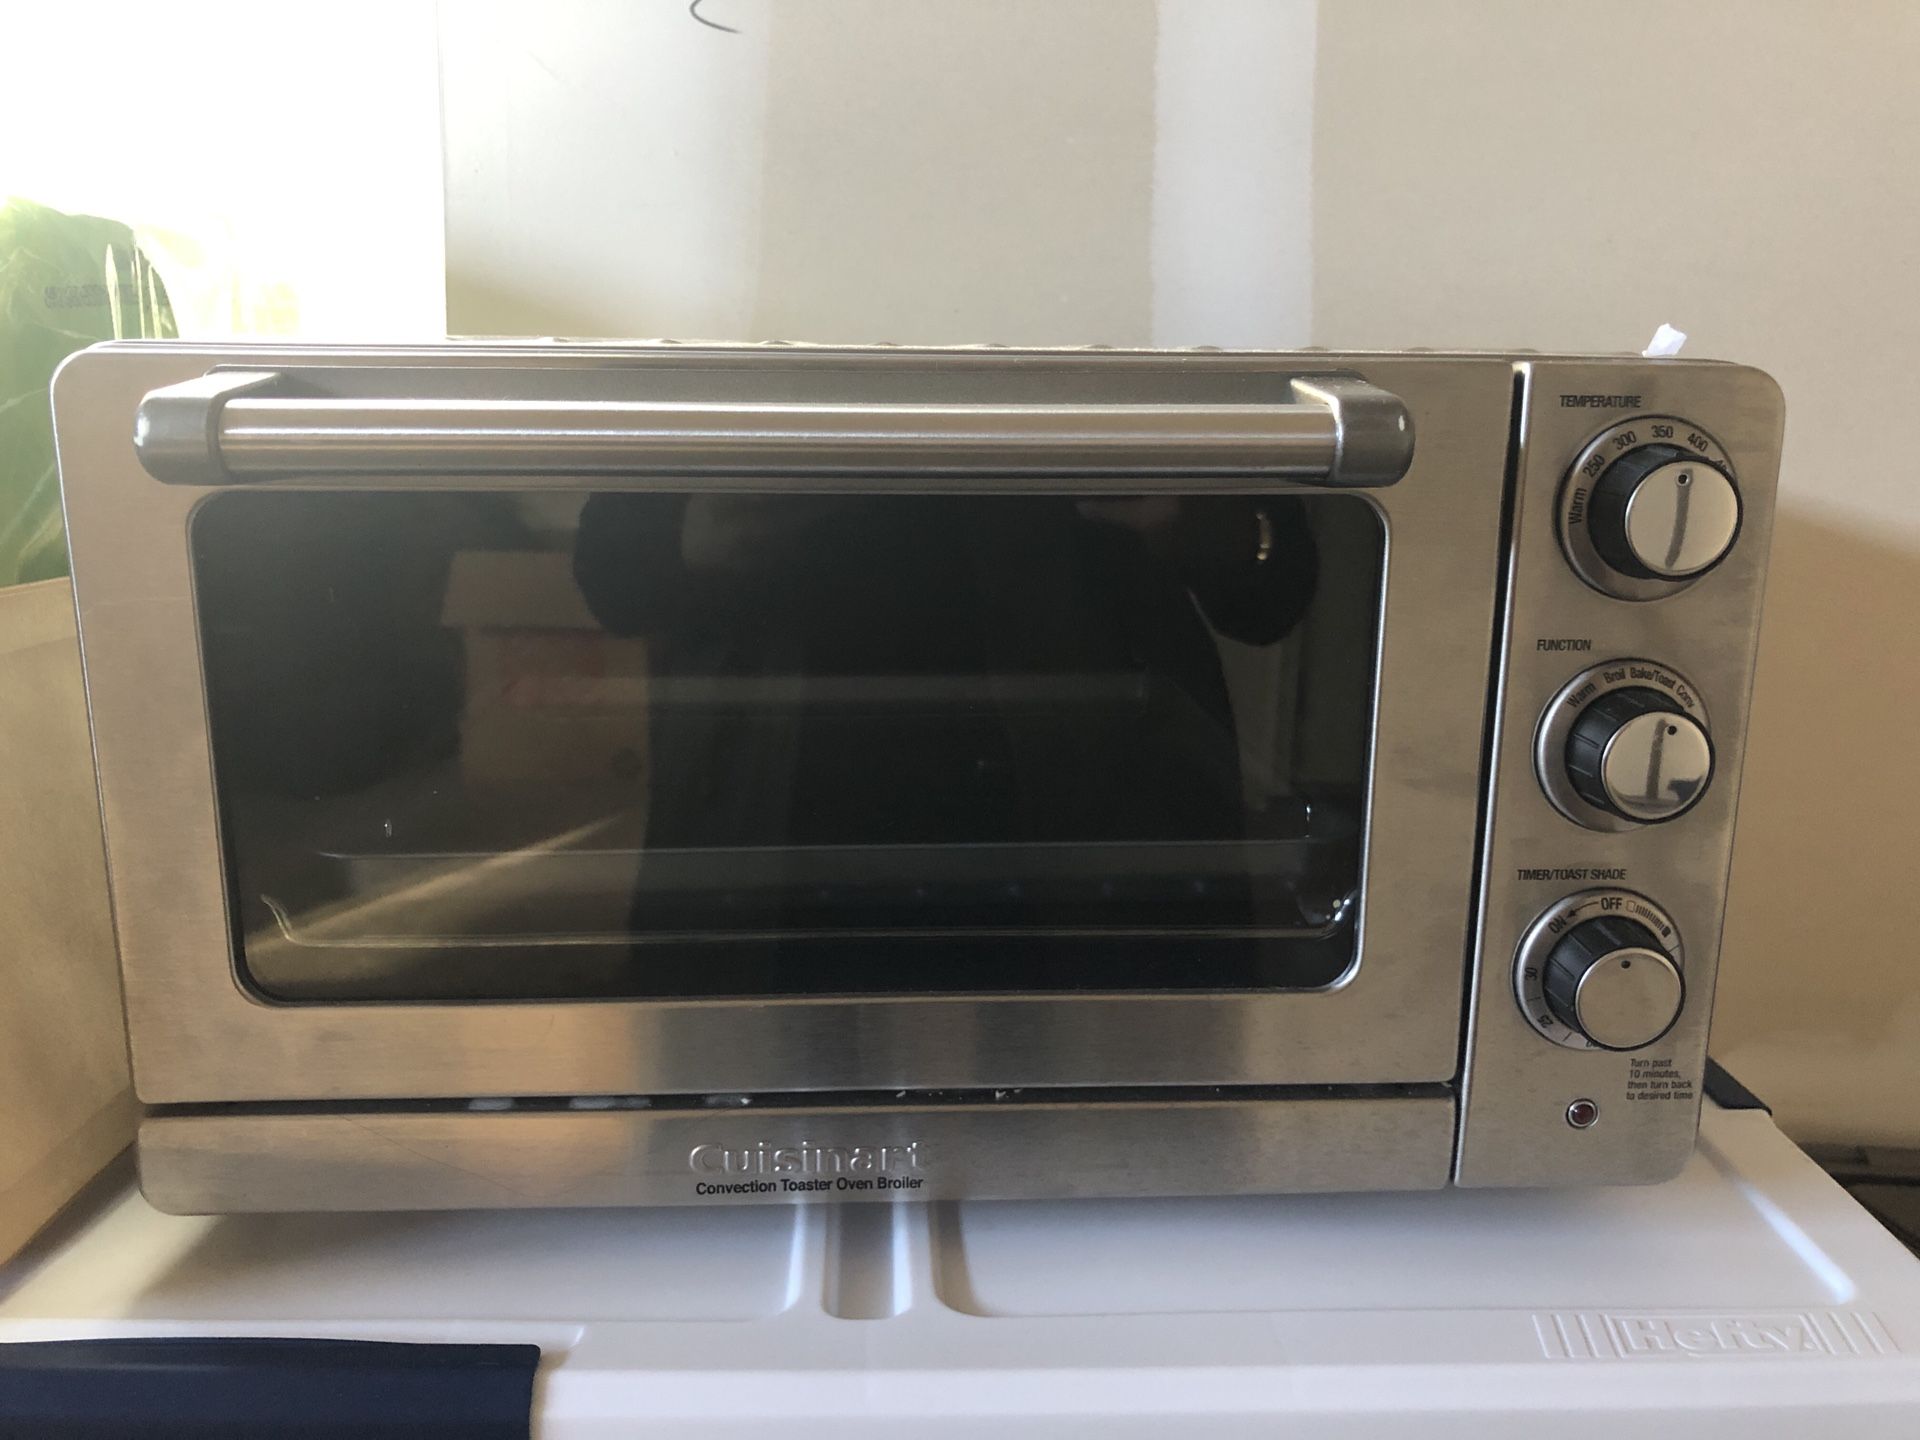 Cuisinart Toaster Oven Broiler